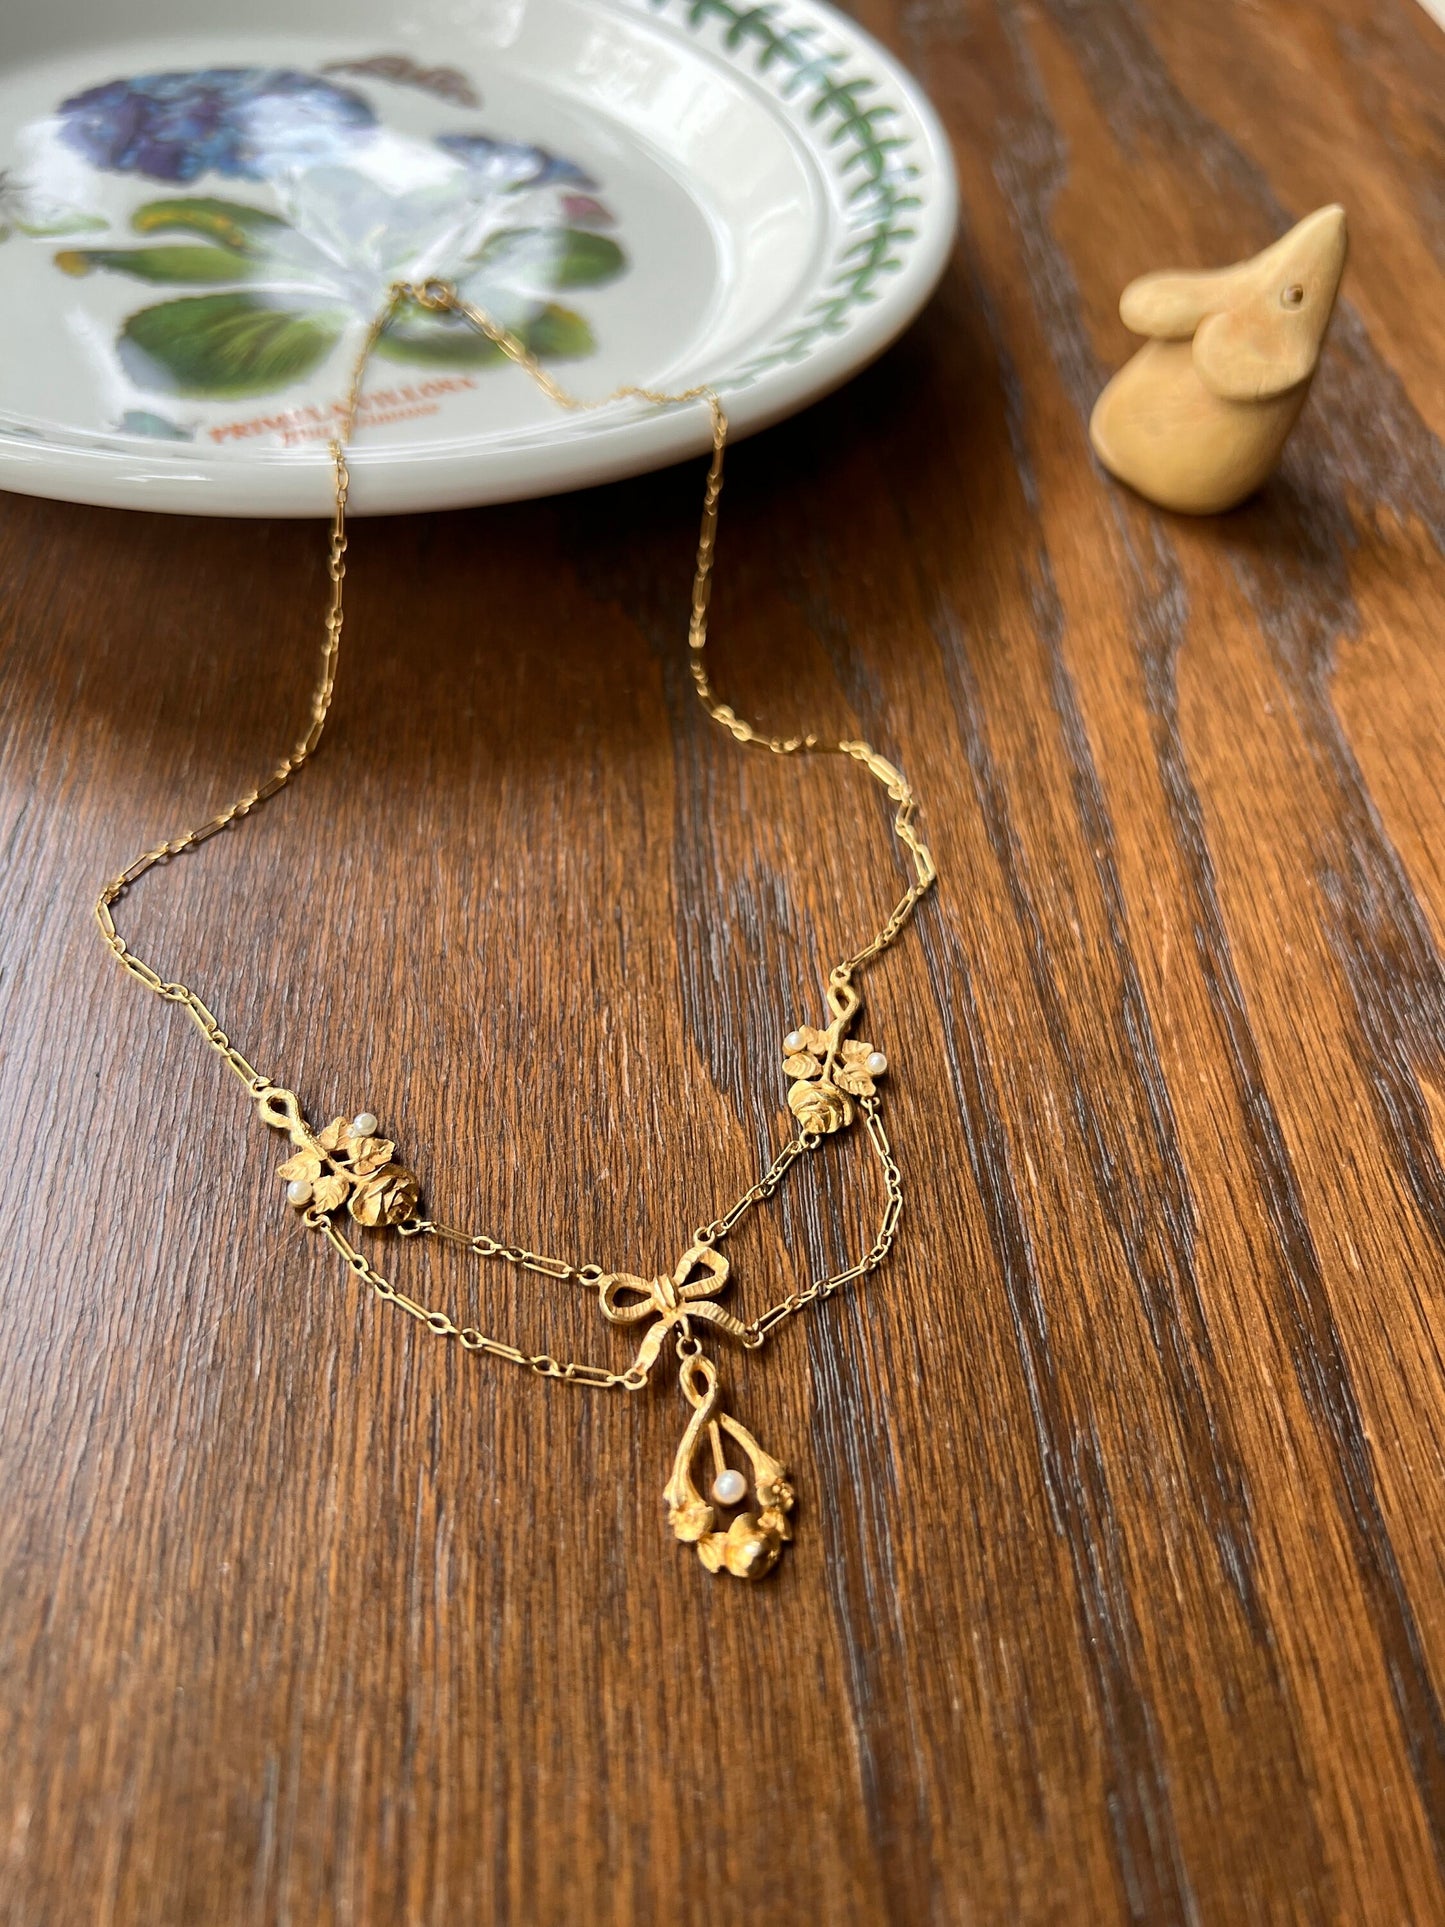 ROSES Floral Bow Ribbon Teardrop French Art Nouveau 18k Gold Esclavage Garland Necklace Chain Belle Epoque Romantic Gift Neckmess Figural